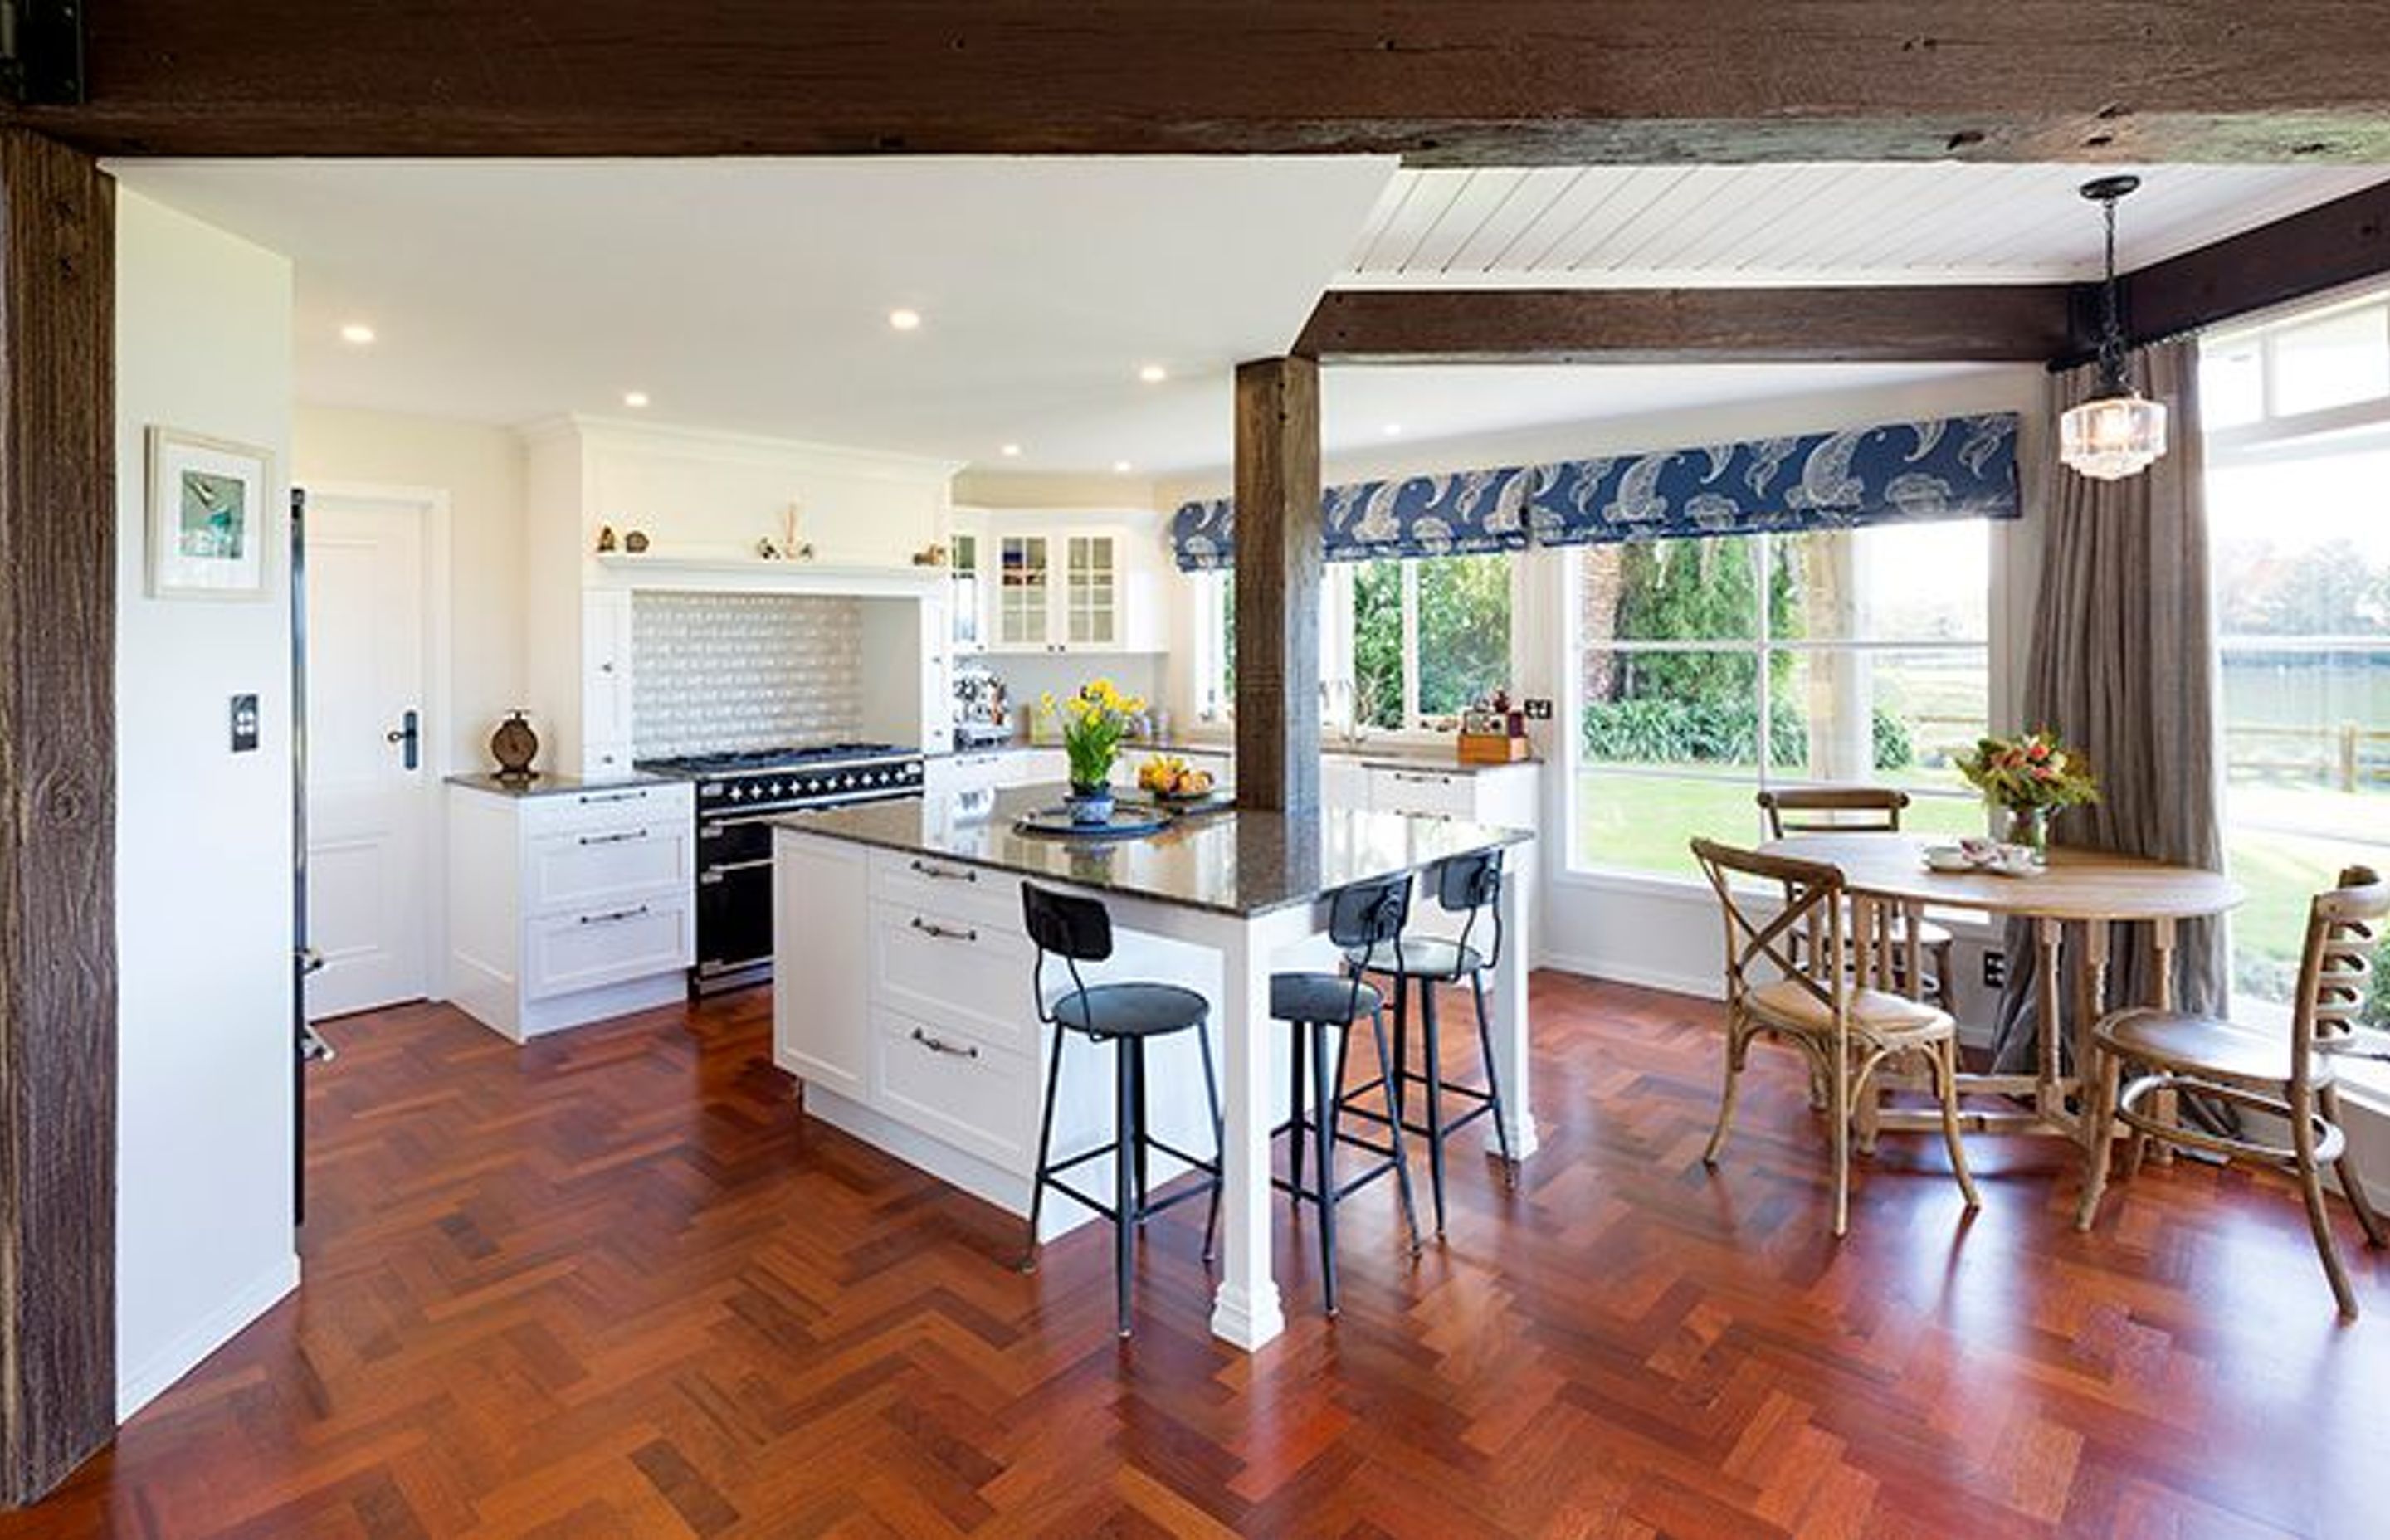 Original Jarrah parquet flooring resurfaced, French country style kitchen designed to work around the existing bridge beam post 